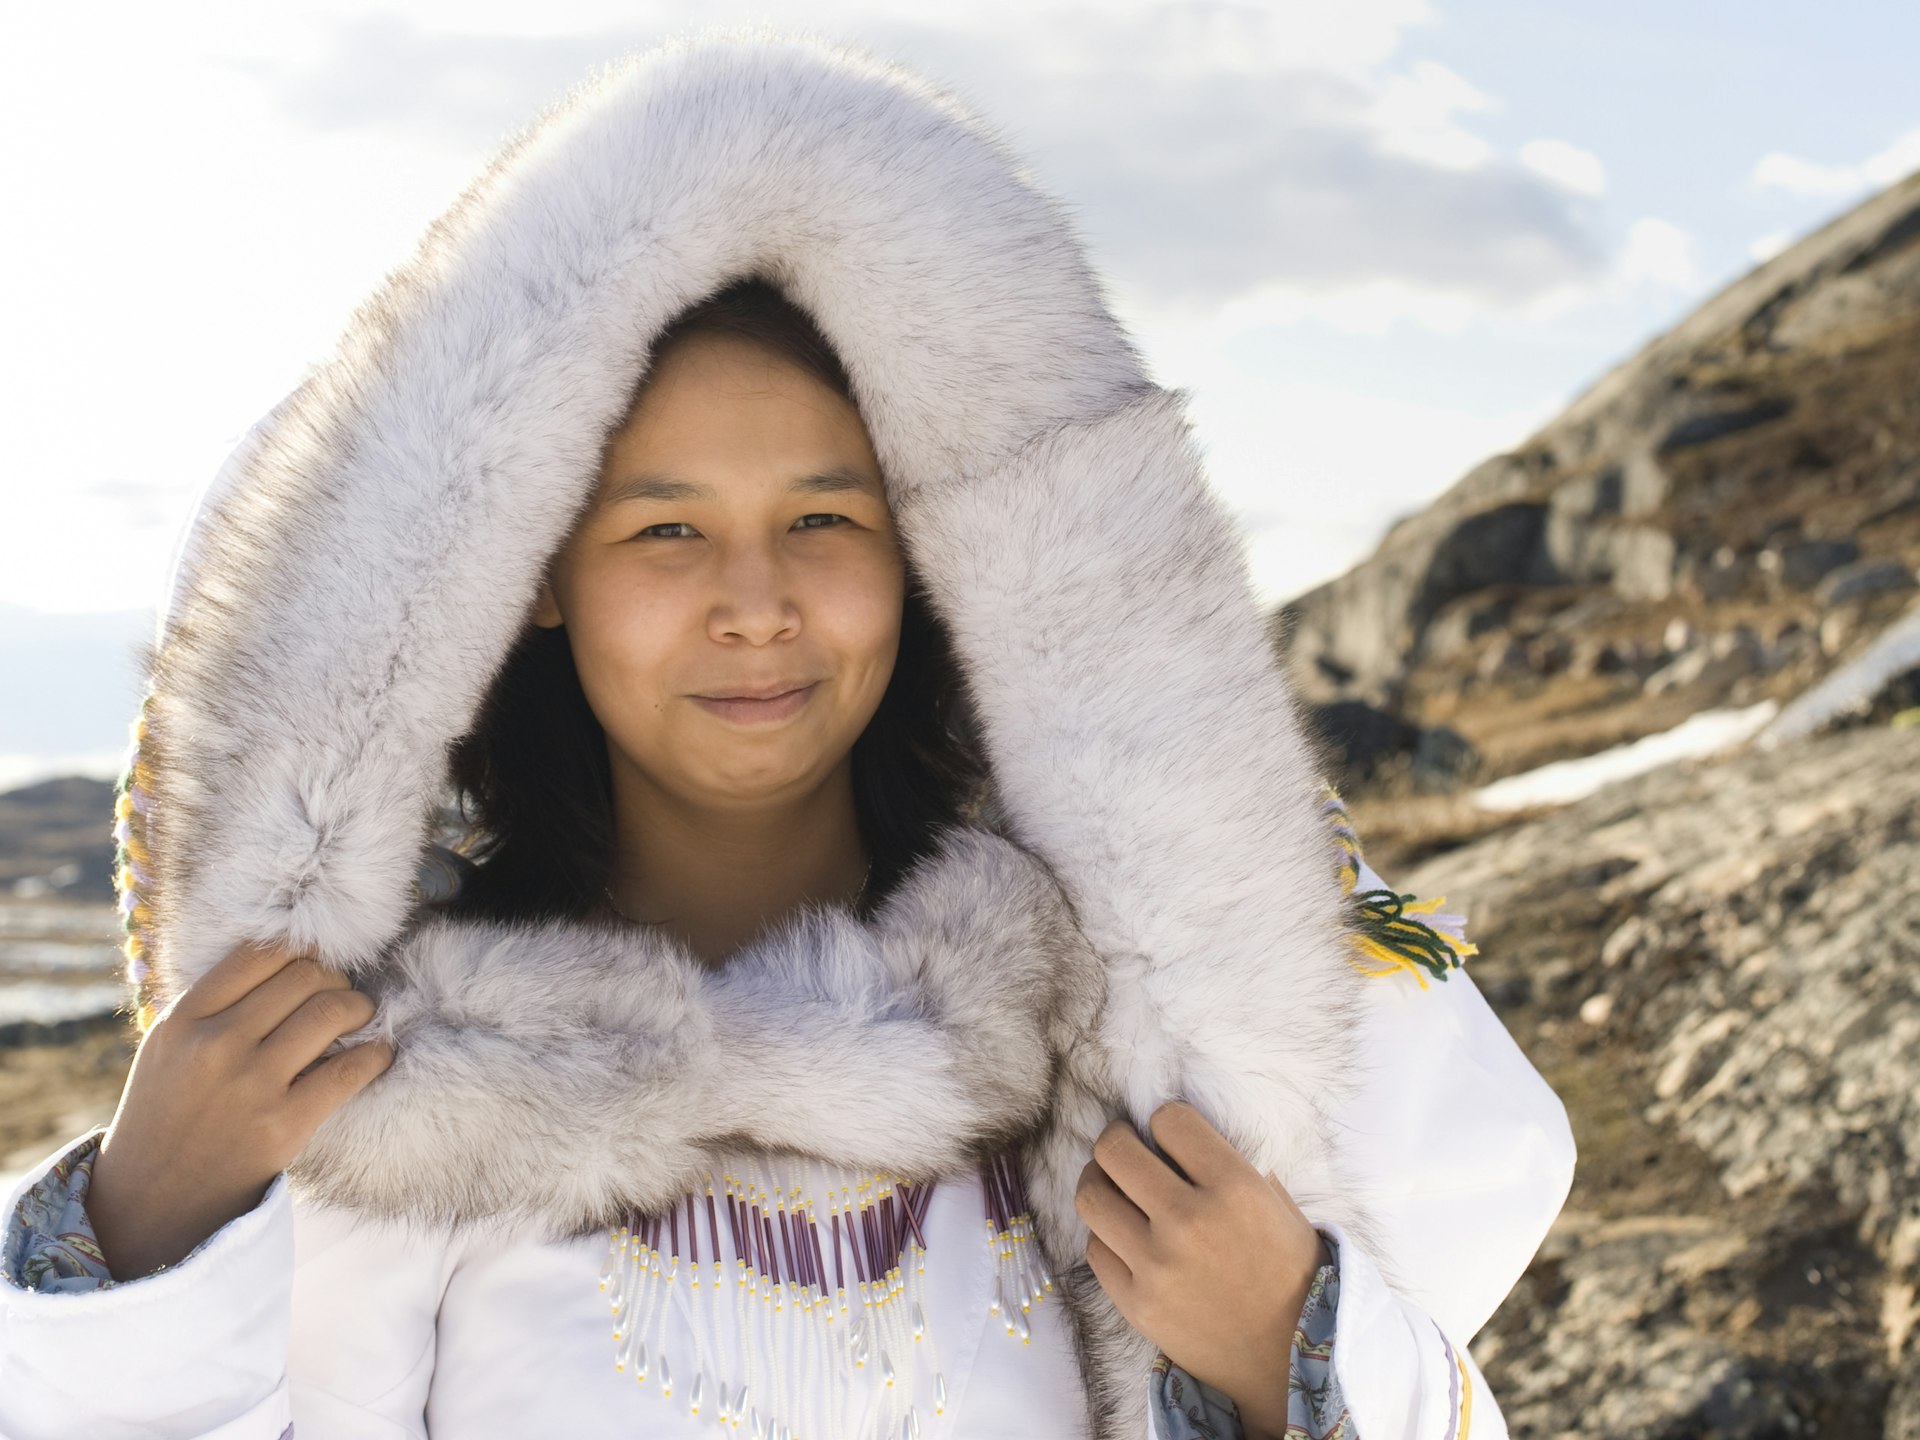 An Inuit woman in a fur hood smiles, Baffin Island, Nunavut, Canada